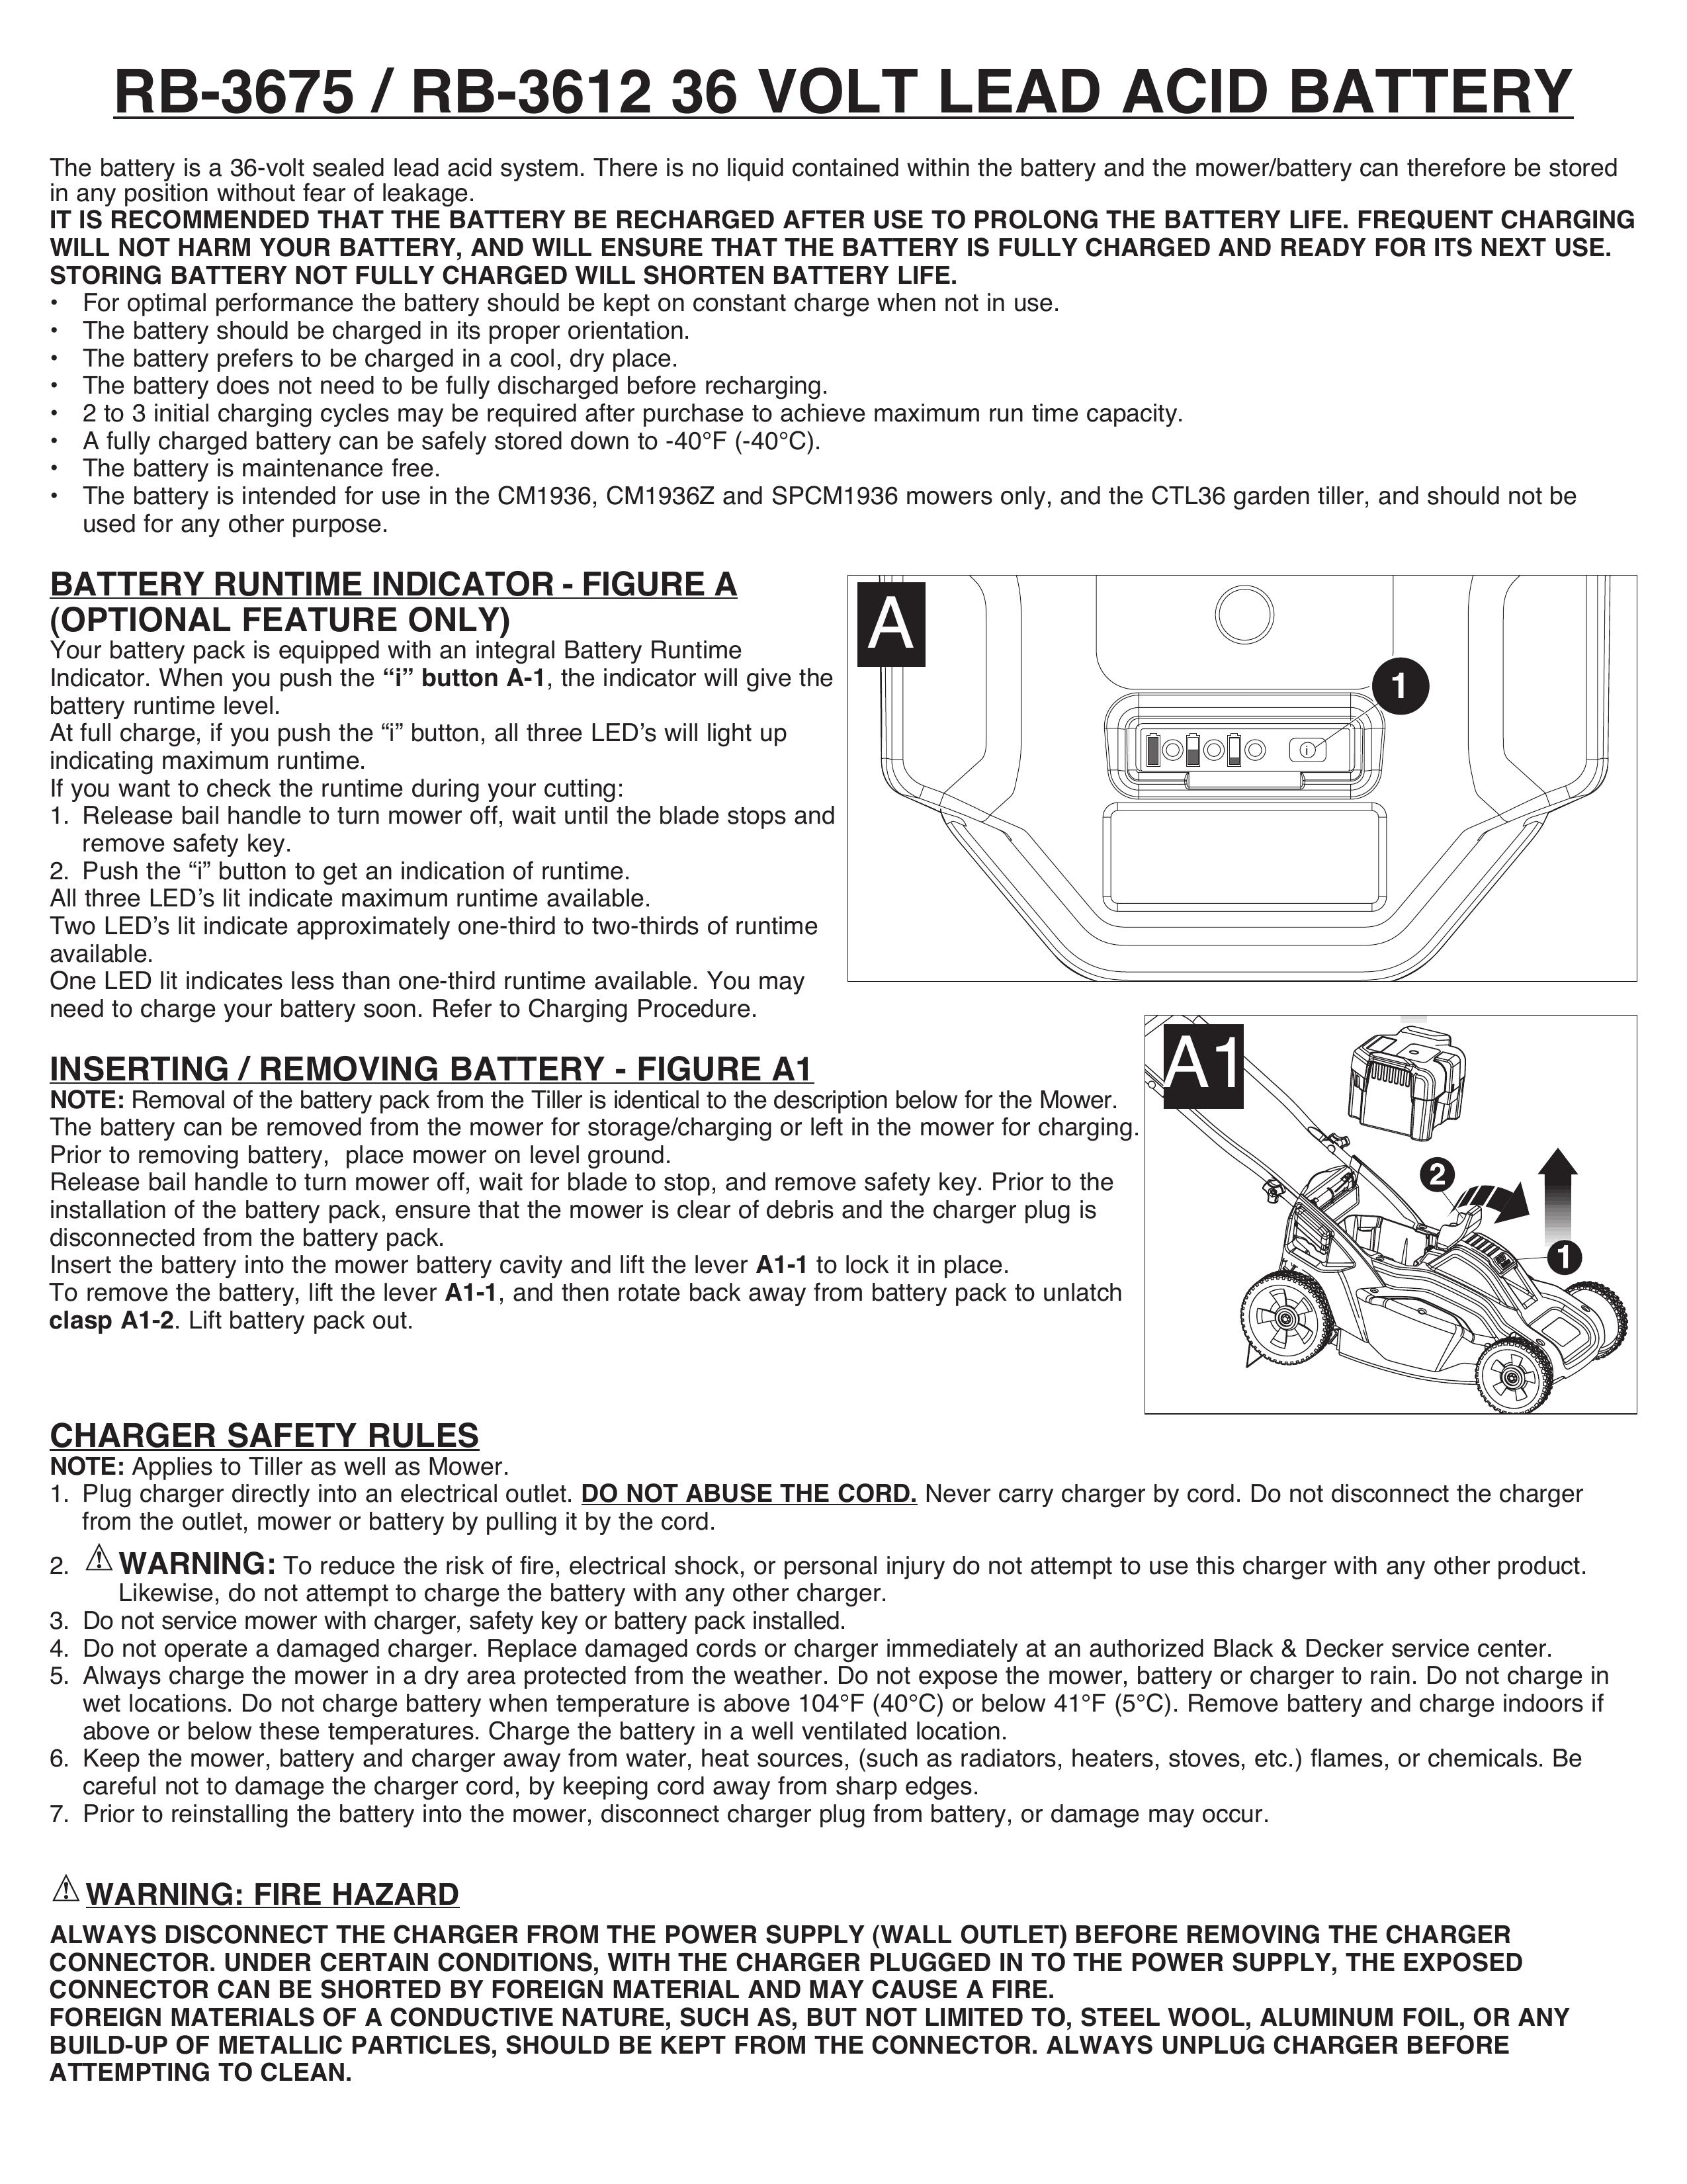 Black & Decker RB-3612 Electric Shaver User Manual